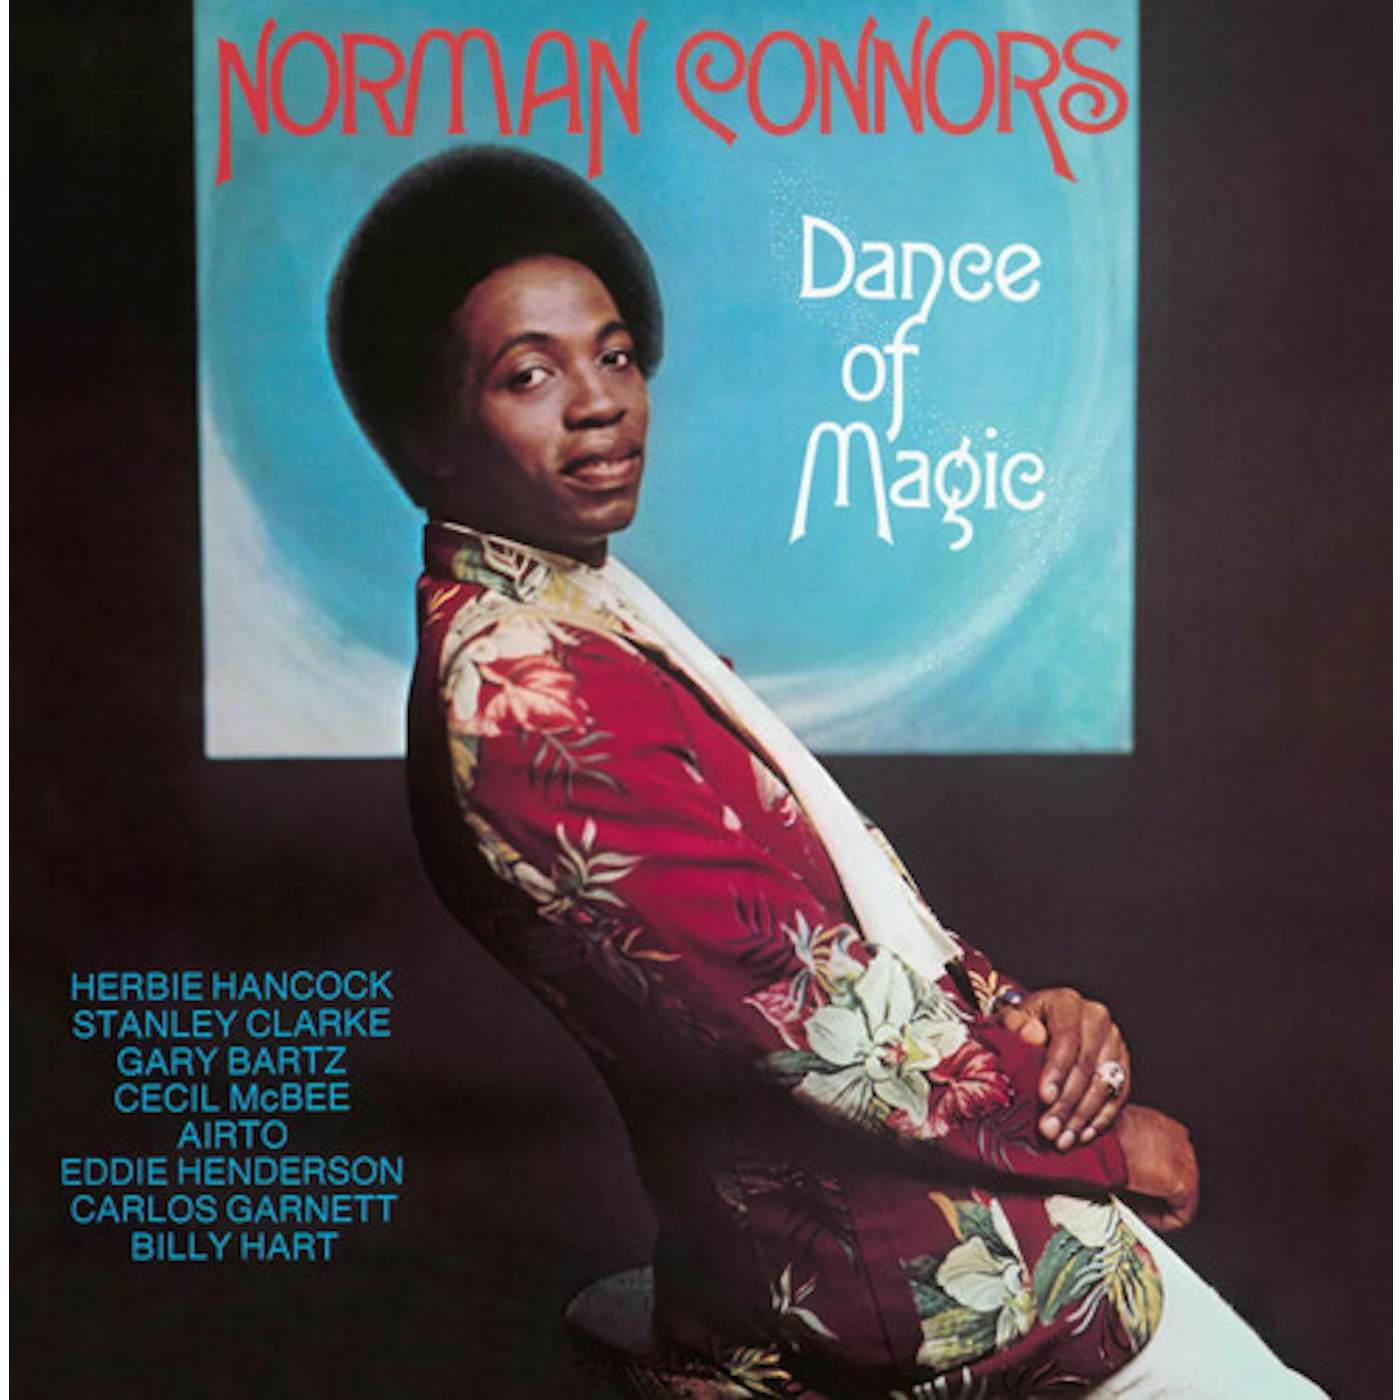 Norman Connors DANCE OF MAGIC Vinyl Record